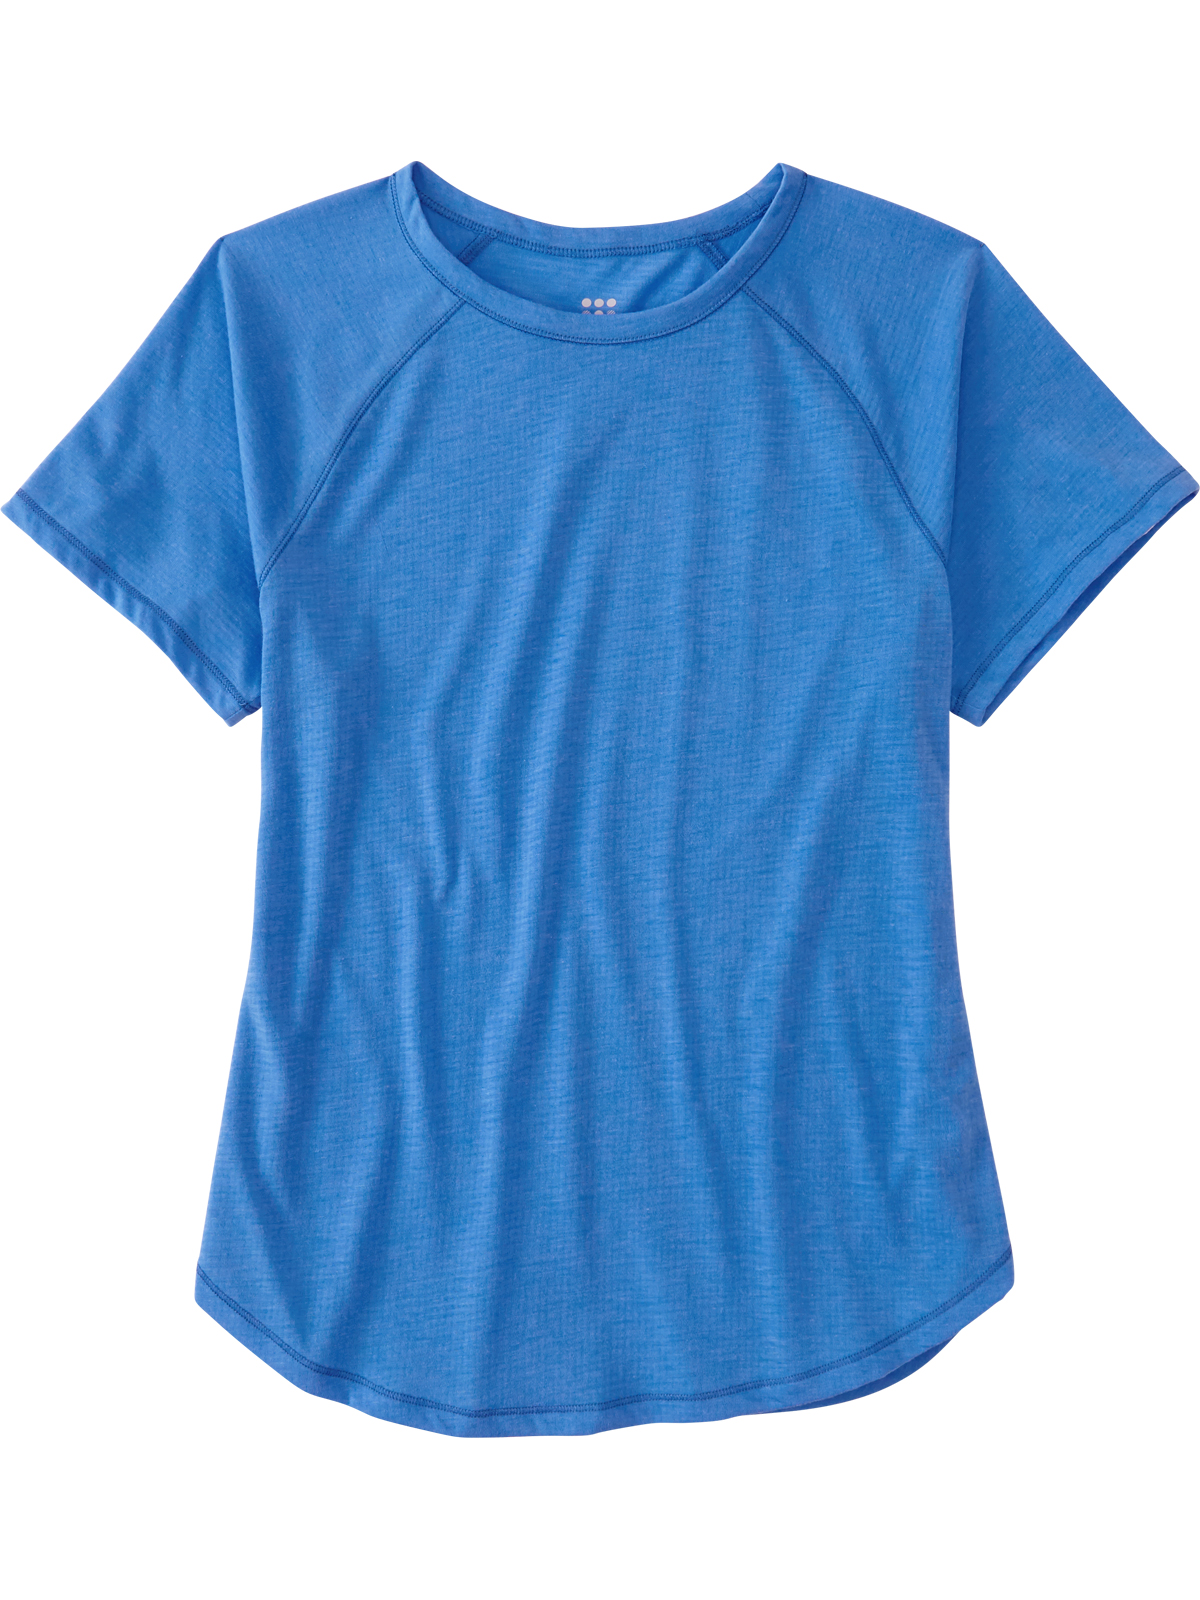 Buy Cotton On Body Ultimate Comfort T-Shirt Bra in Cornflower Blue